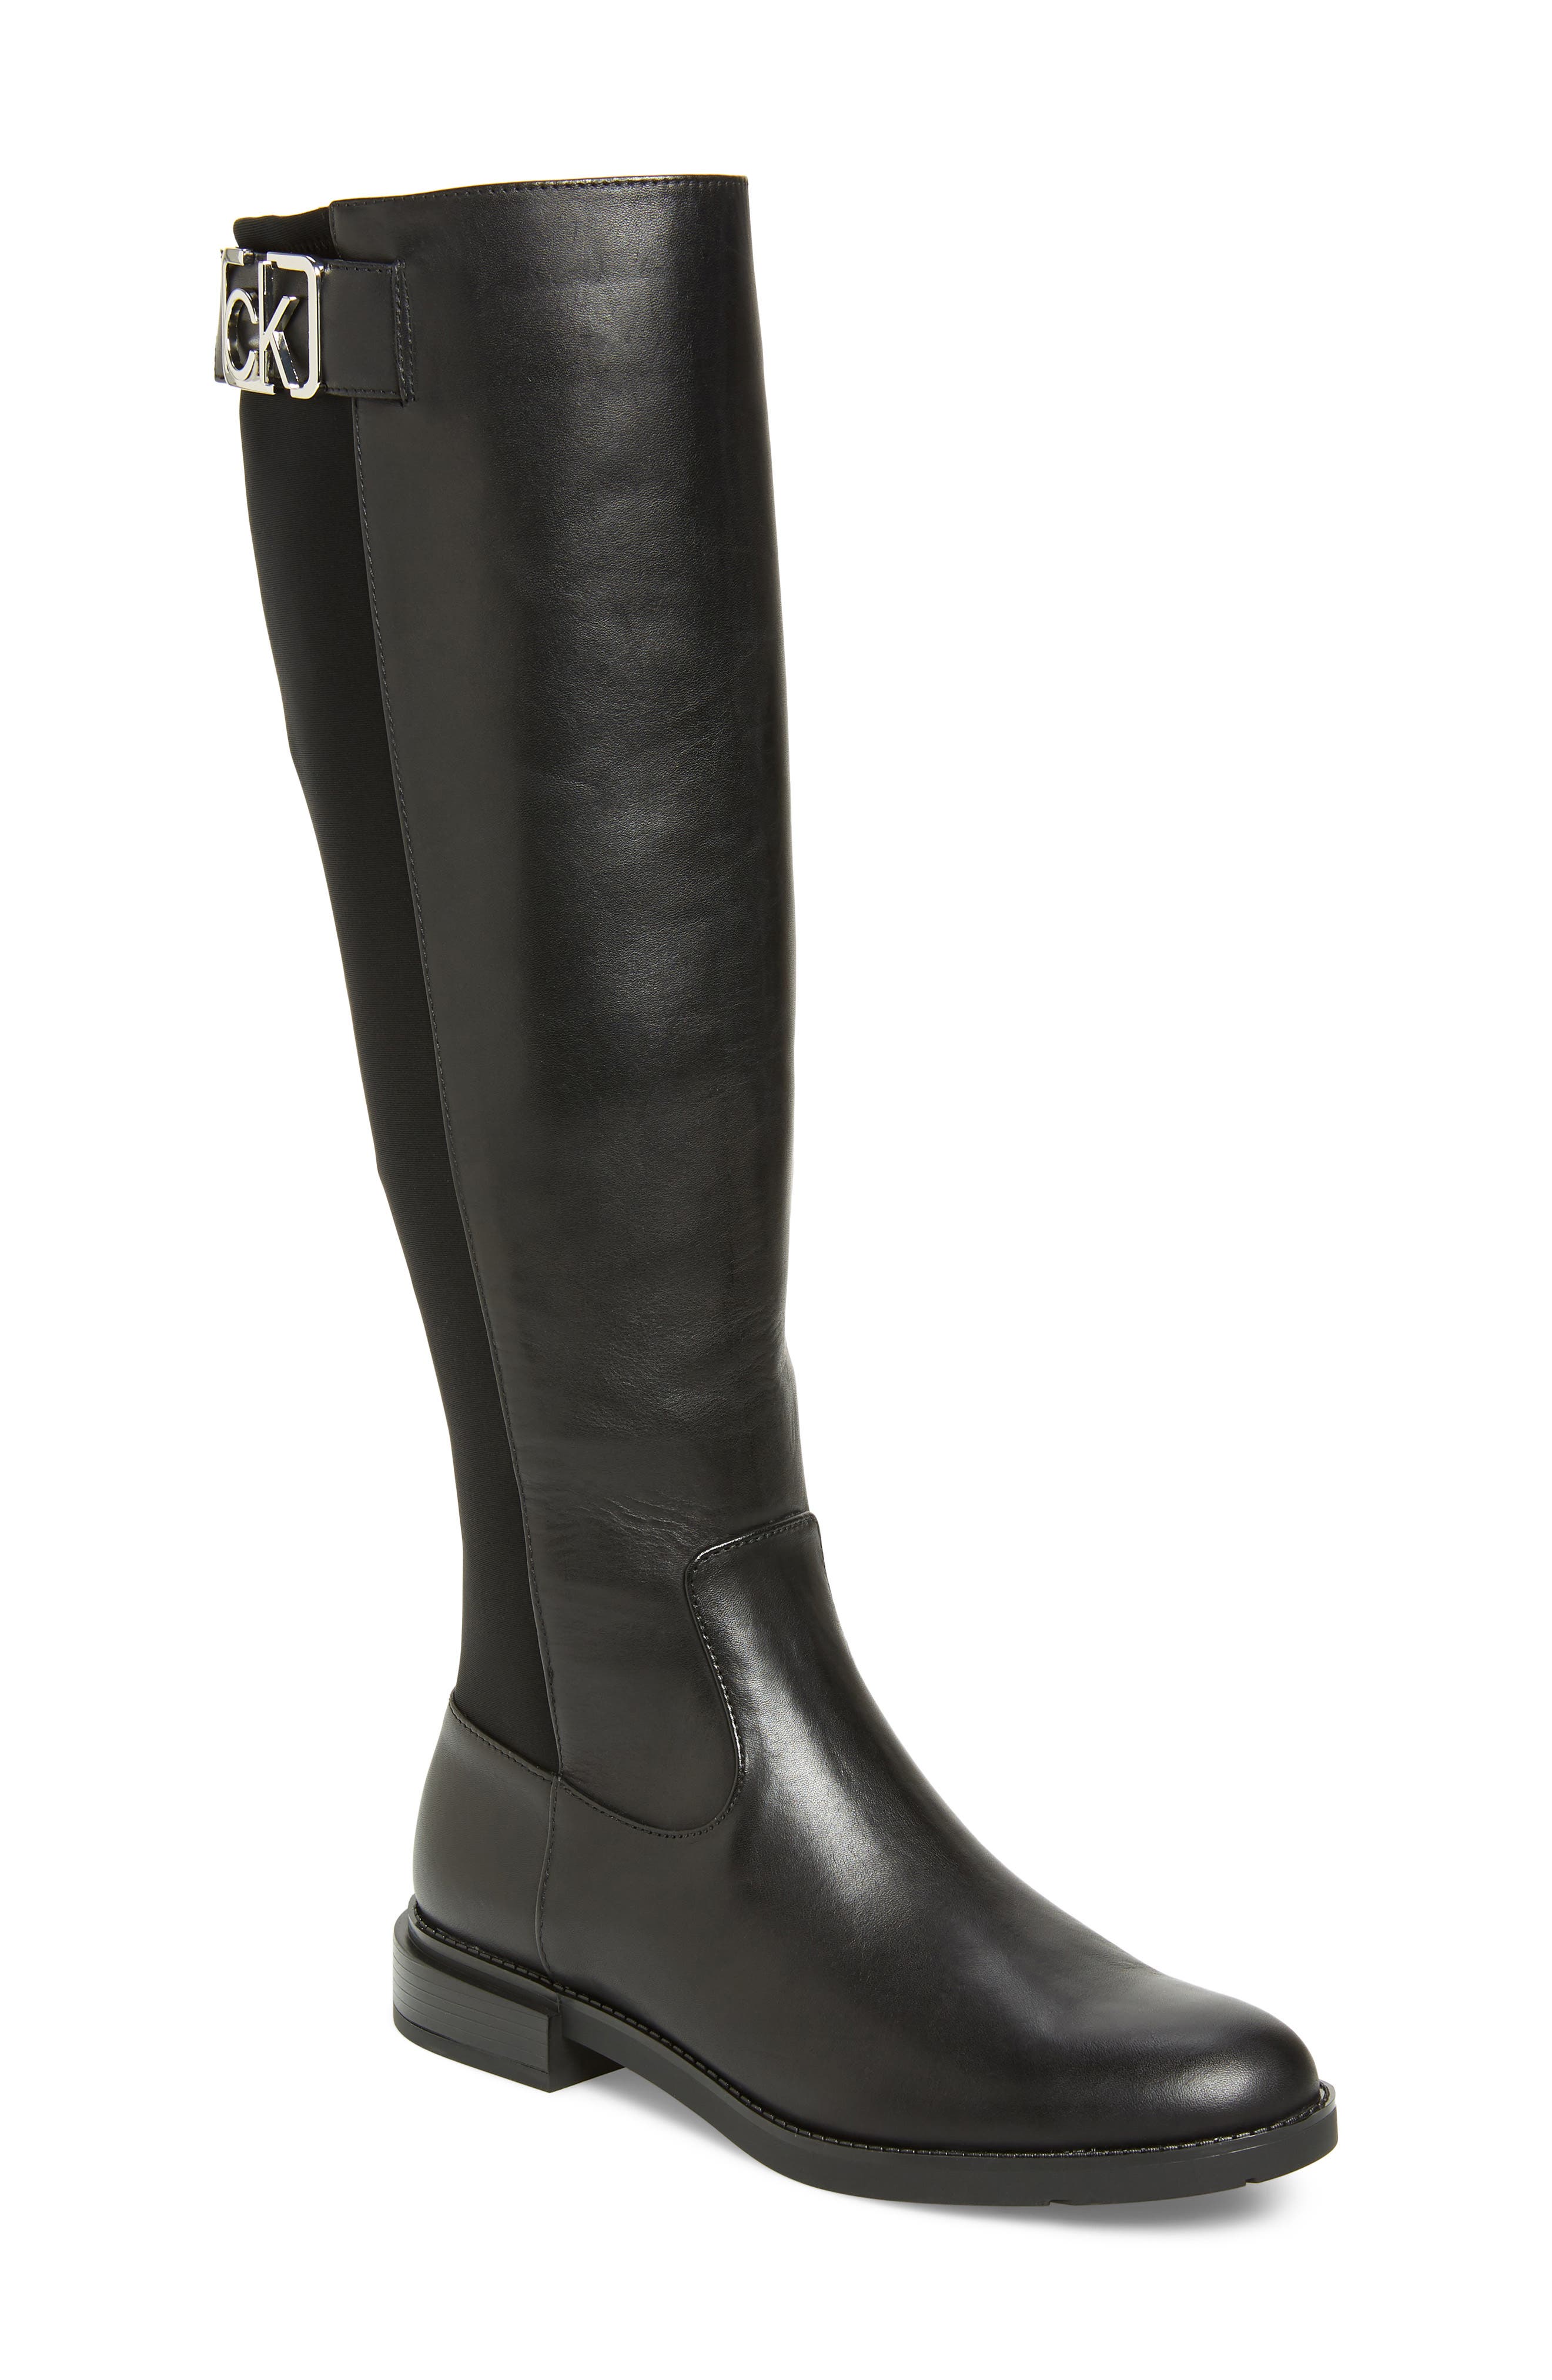 UPC 194060160818 product image for Women's Calvin Klein Ada Knee High Boot, Size 7 M - Black | upcitemdb.com